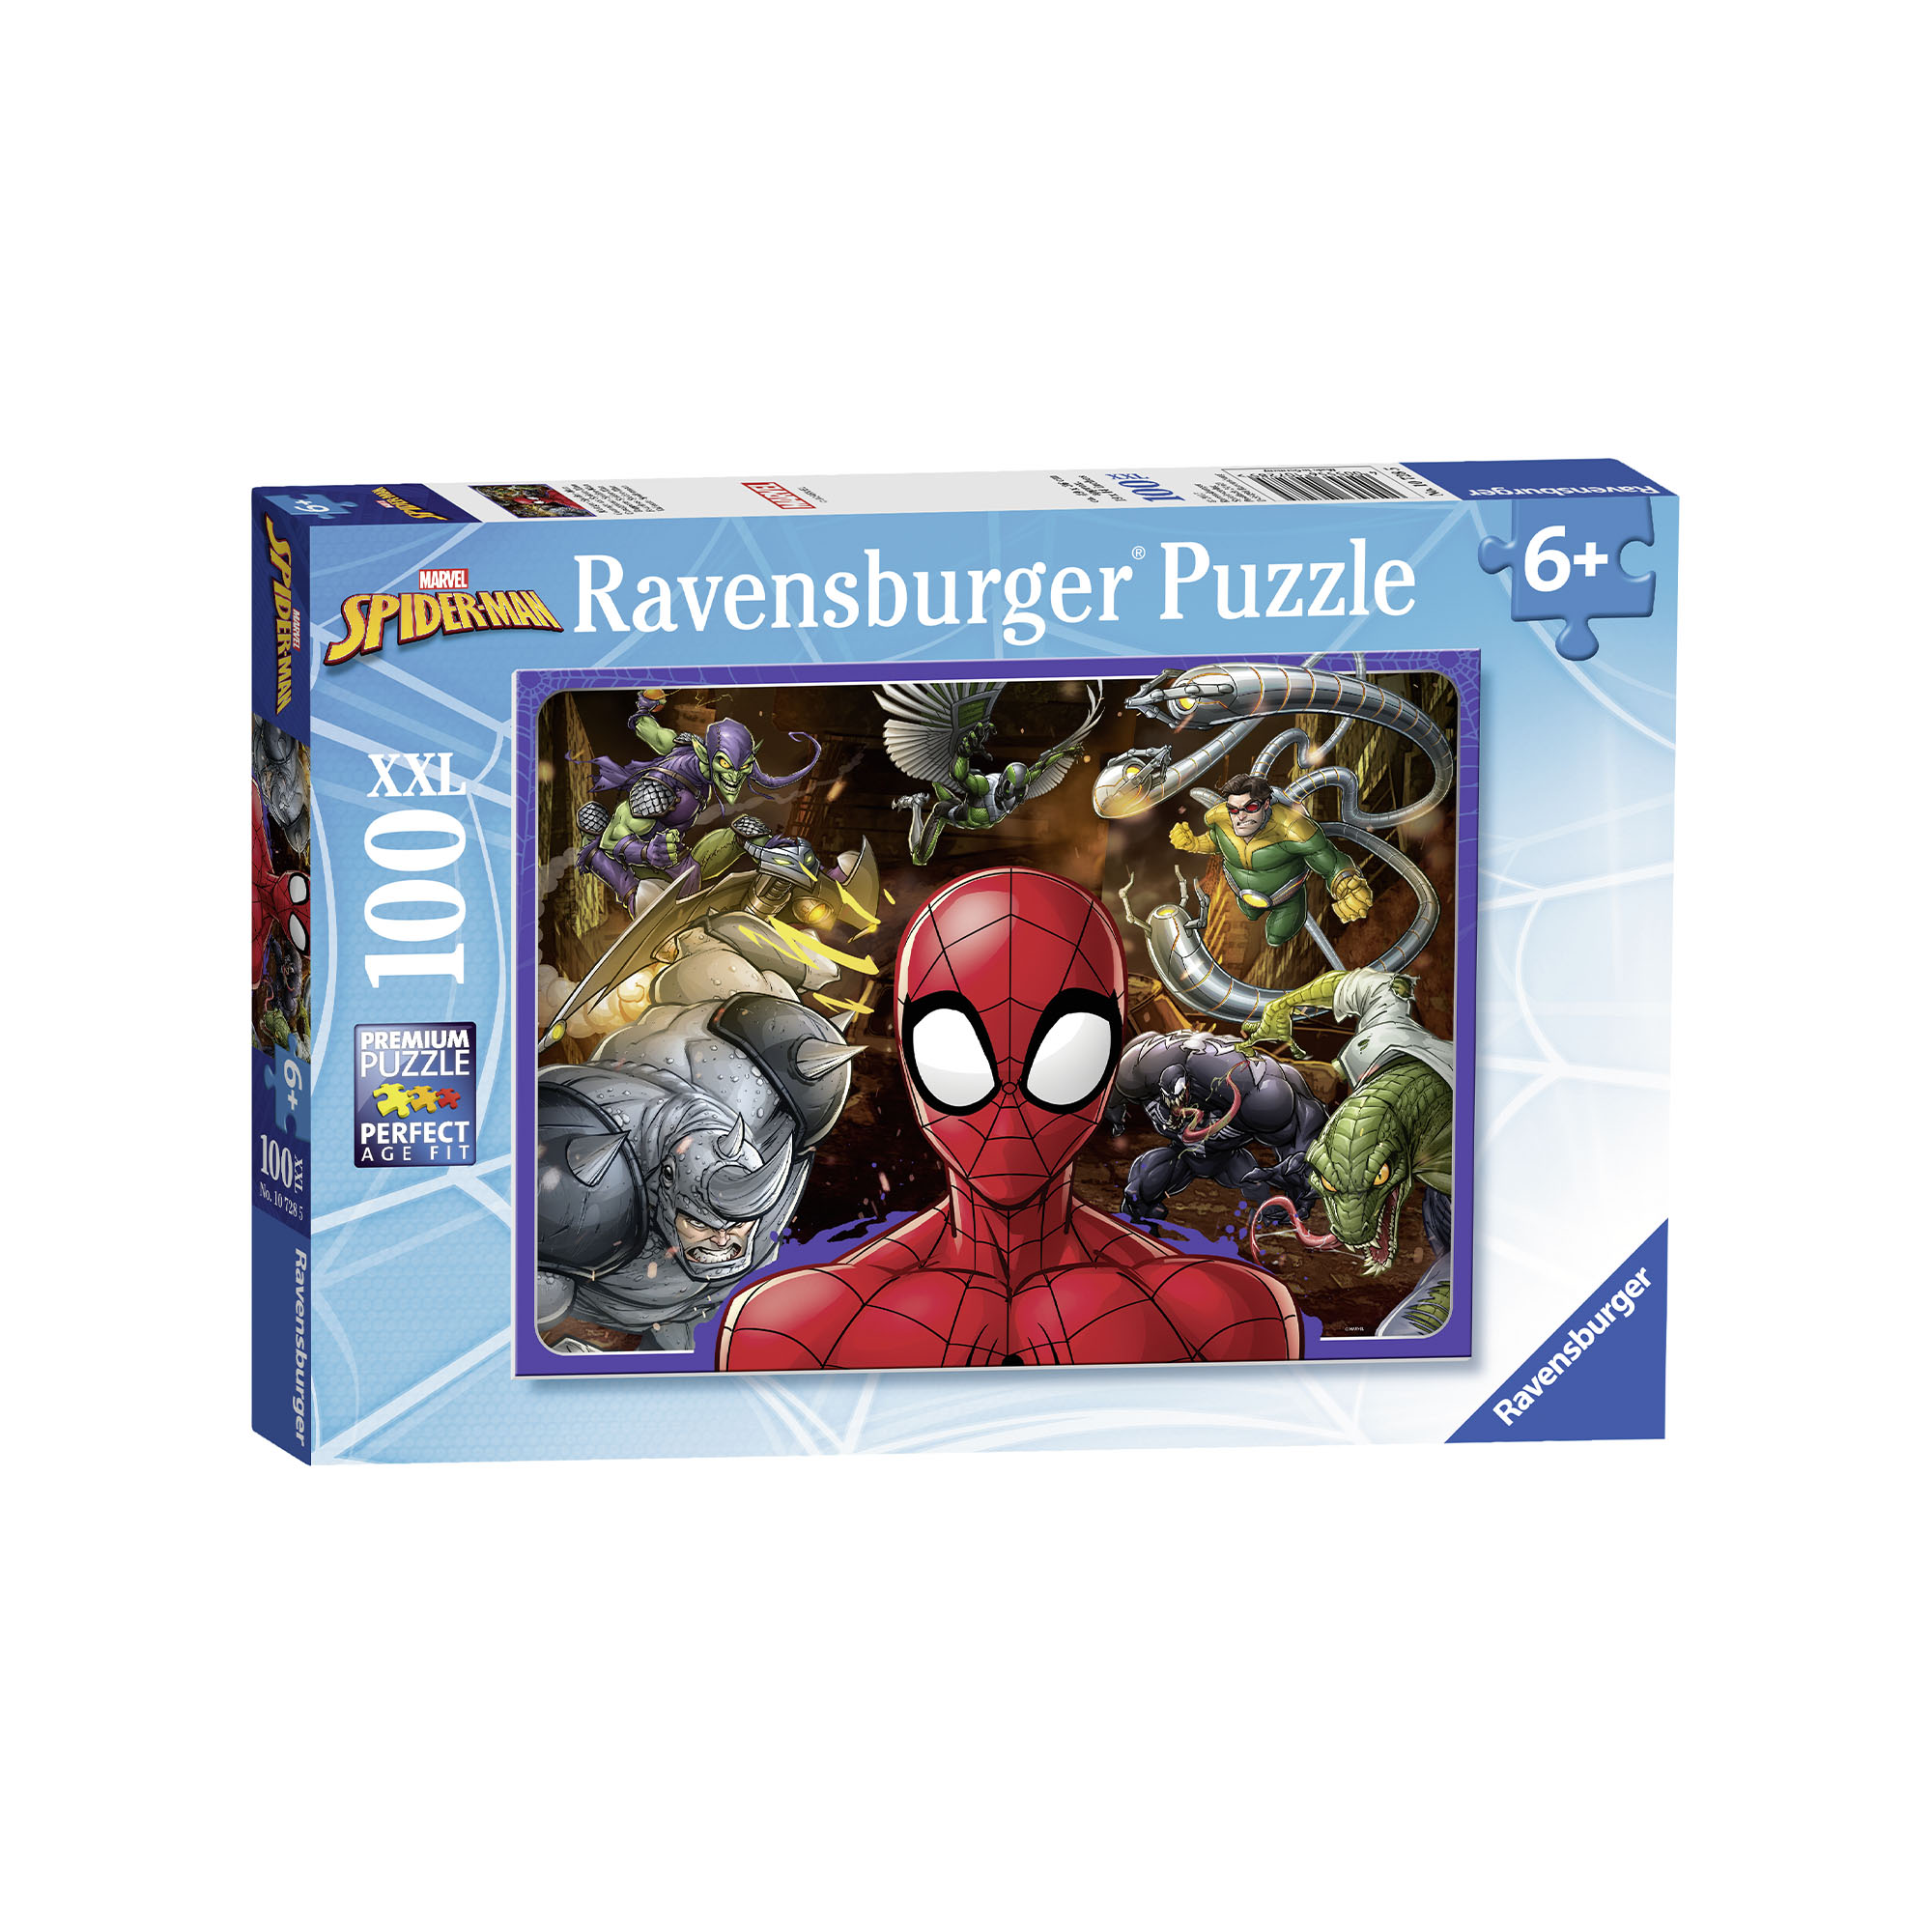 Ravensburger Puzzle 100 pezzi 10728 - Spiderman, , large